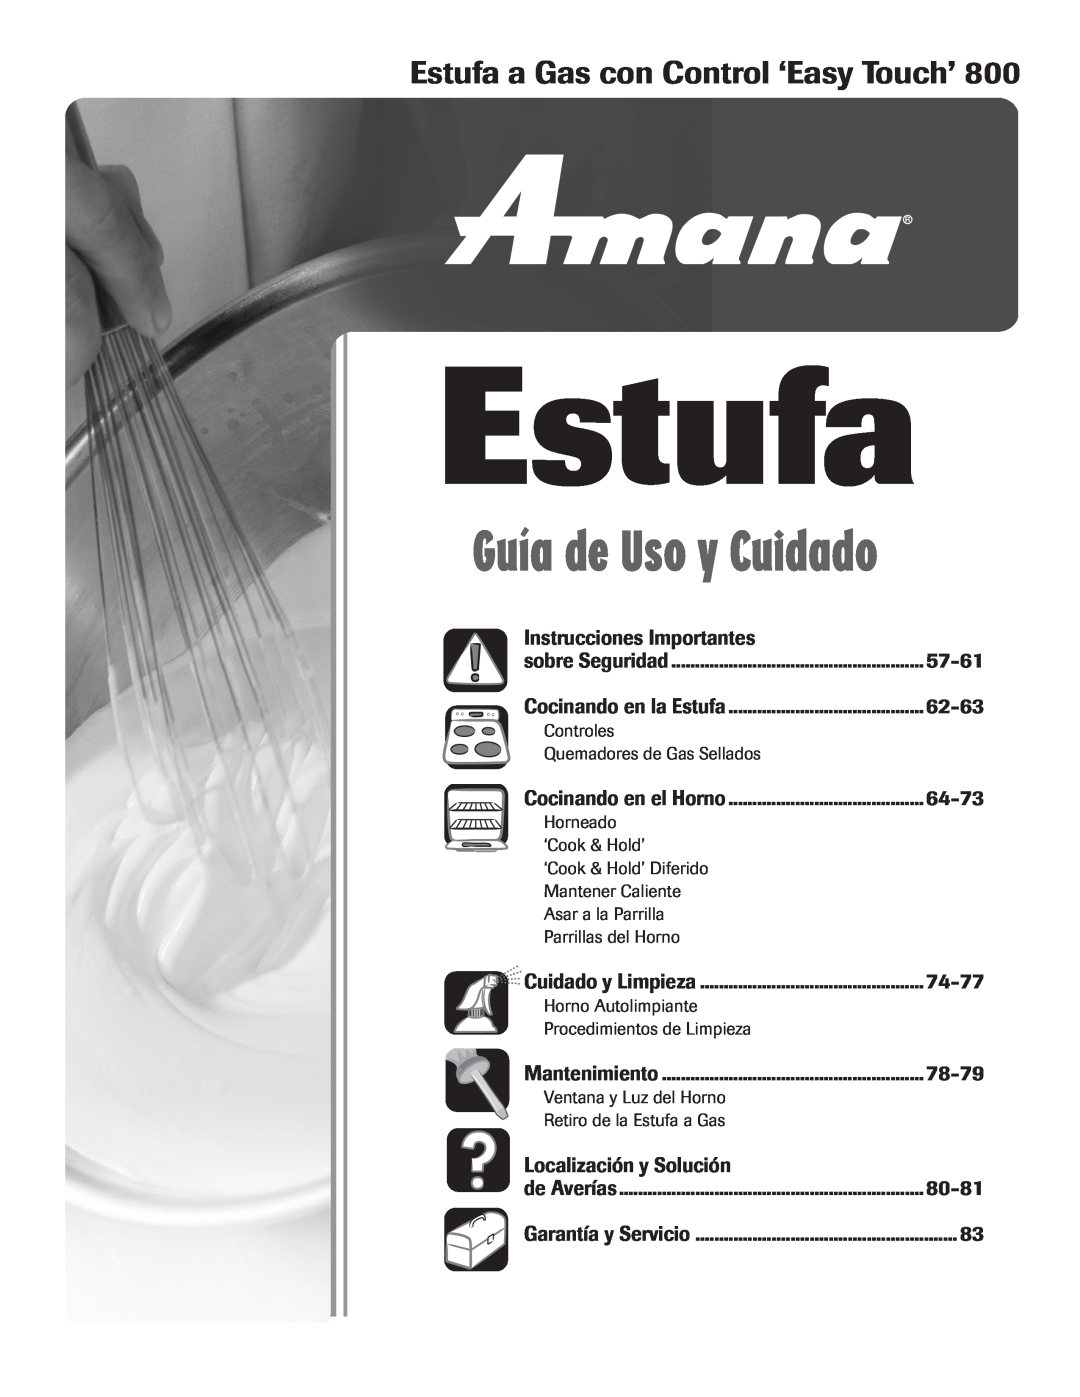 Amana AGR5835QDW Estufa a Gas con Control ‘Easy Touch’, Instrucciones Importantes, 57-61, 62-63, 64-73, 74-77, 78-79 